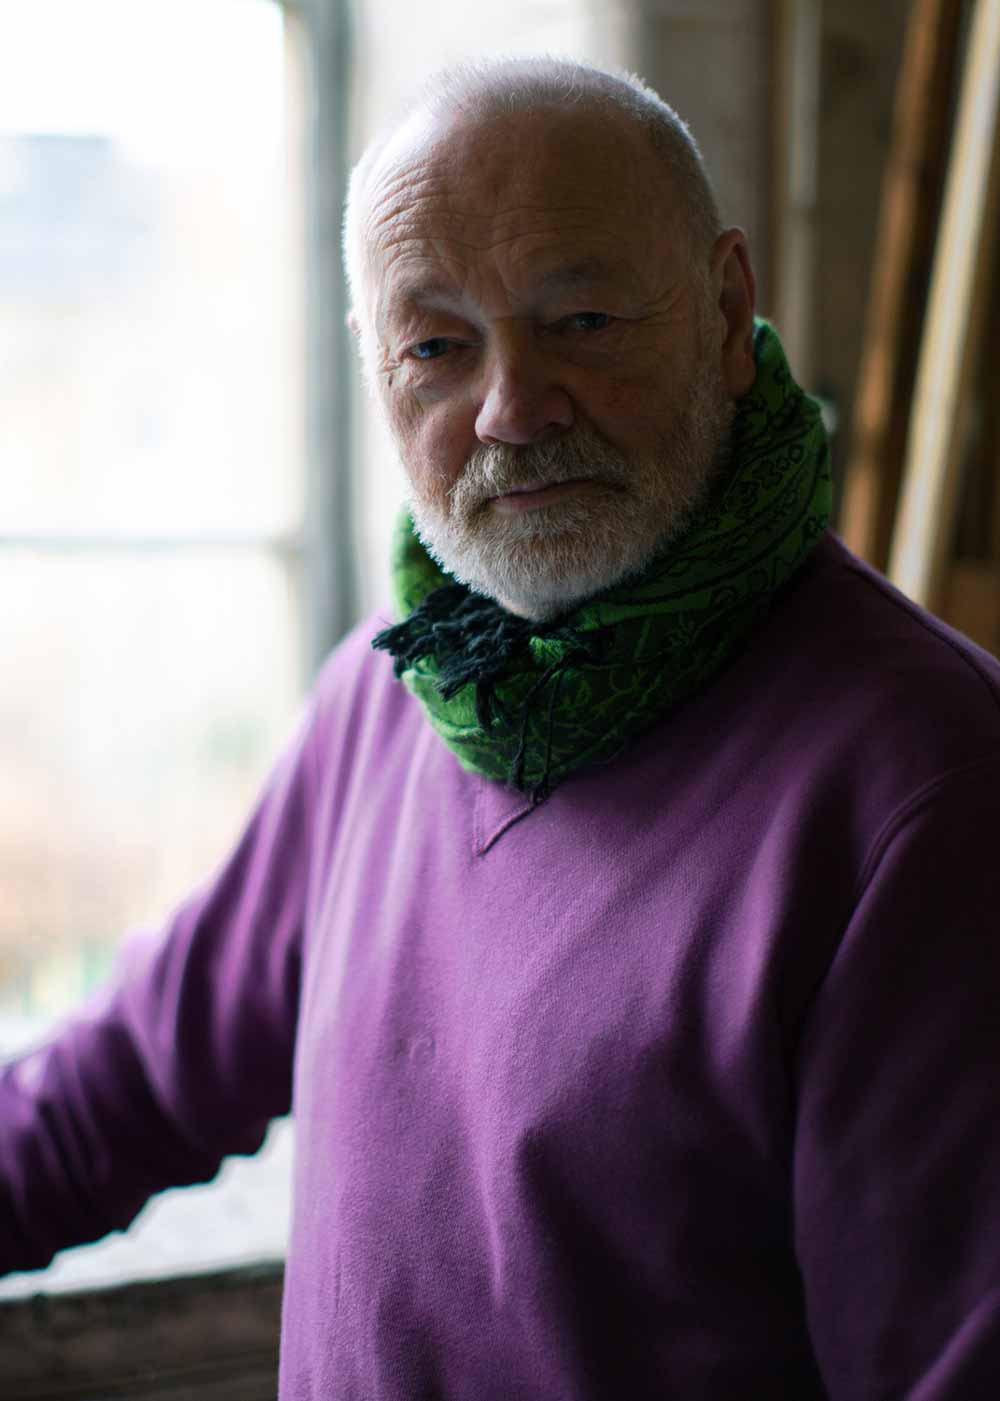 Portait of artist Jon George, wearing purple jumper